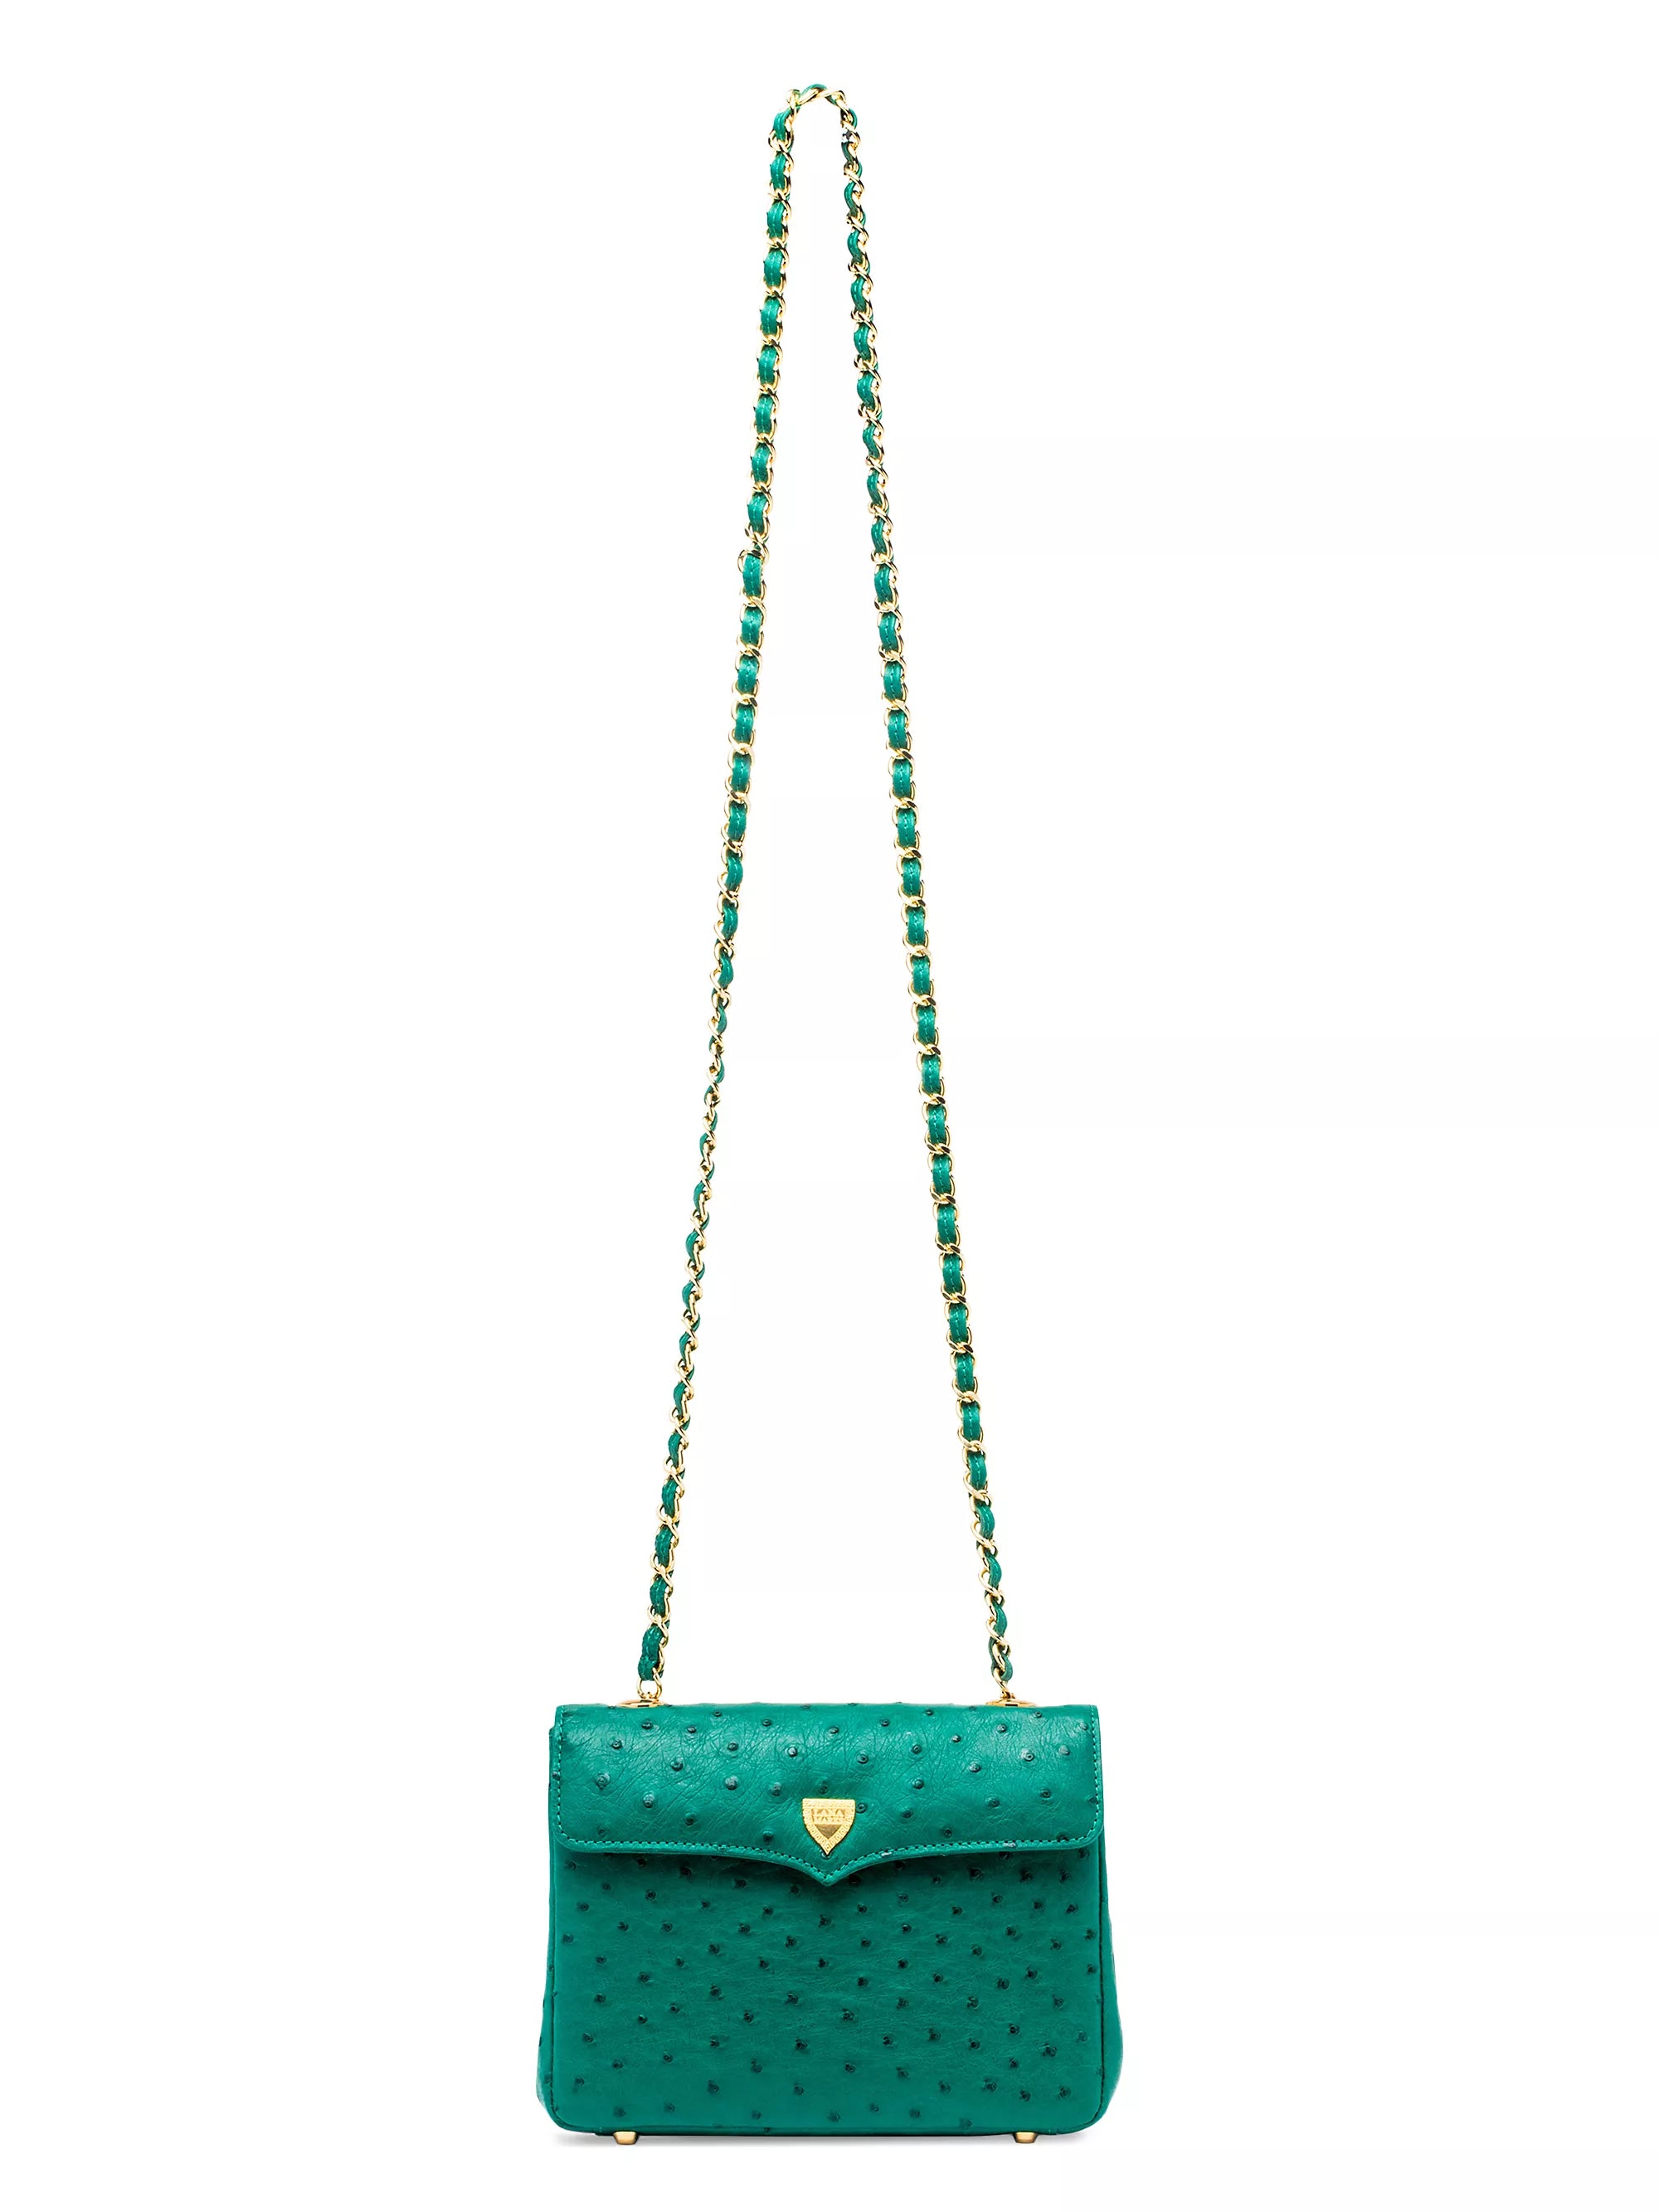 Medium Chain Bag in Green